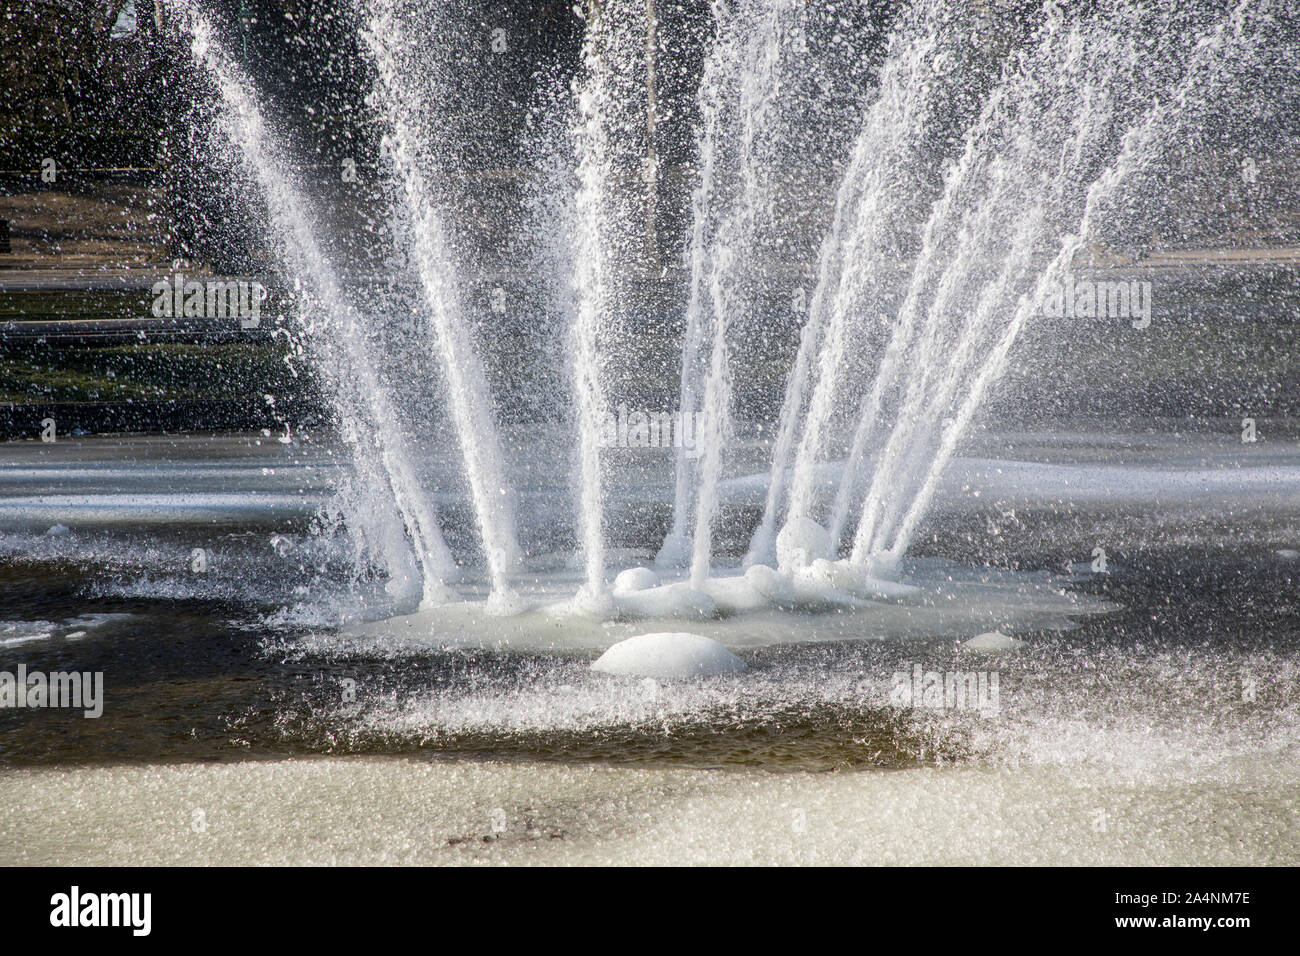 Fontana, fontana, inverno, parzialmente l'acqua congelata a meno temperature, Foto Stock